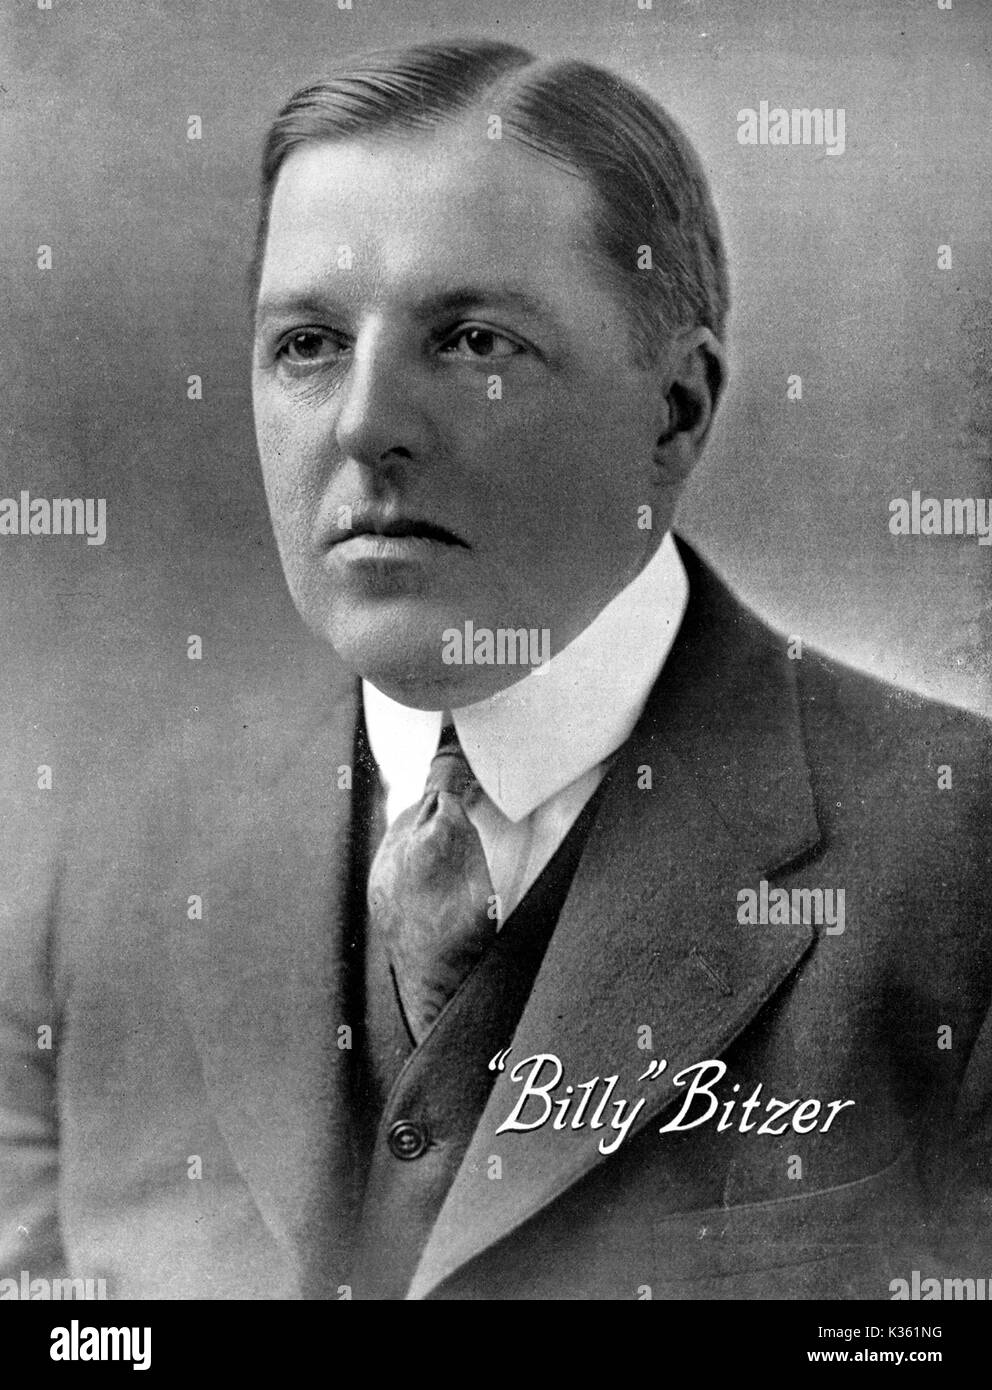 BILLY BITZER Stockfoto